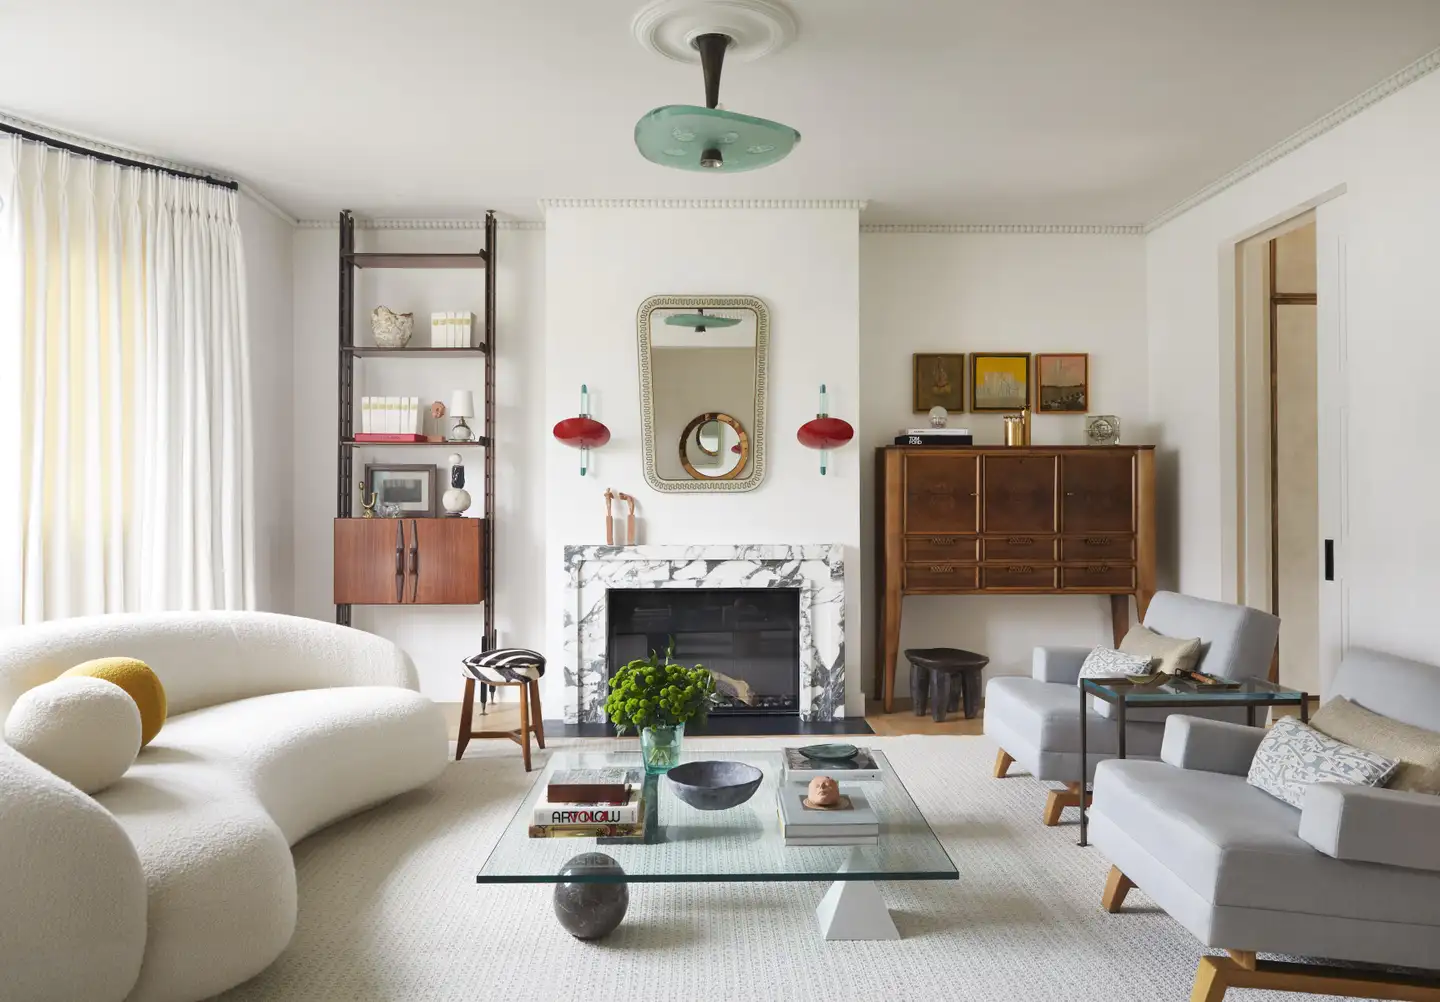 A colorful modern interior design project by Bryan O'Sullivan